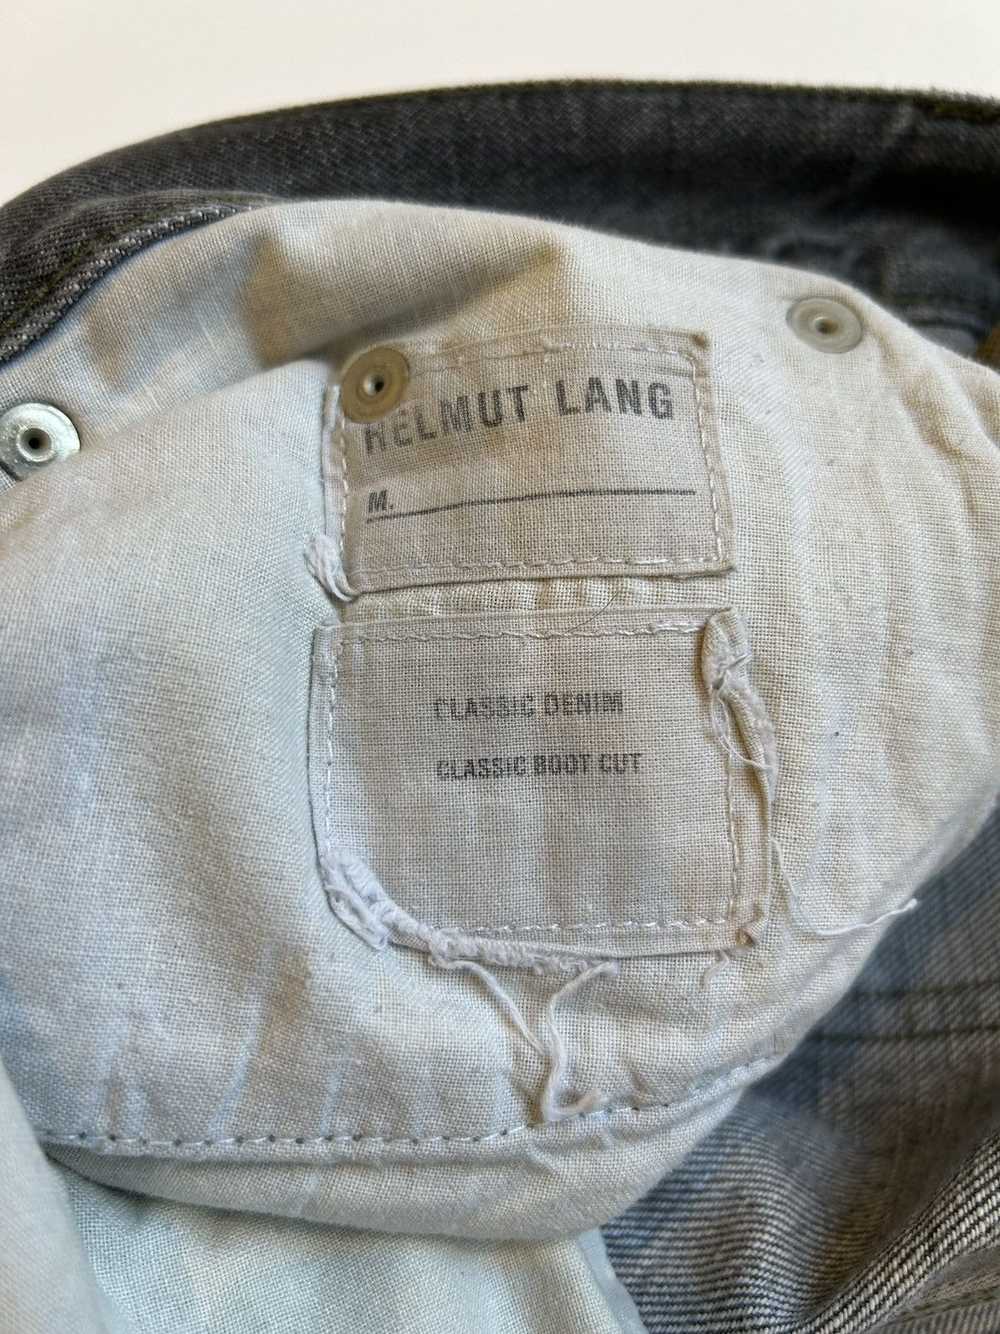 Helmut Lang Helmut Lang Denim Jeans - image 9